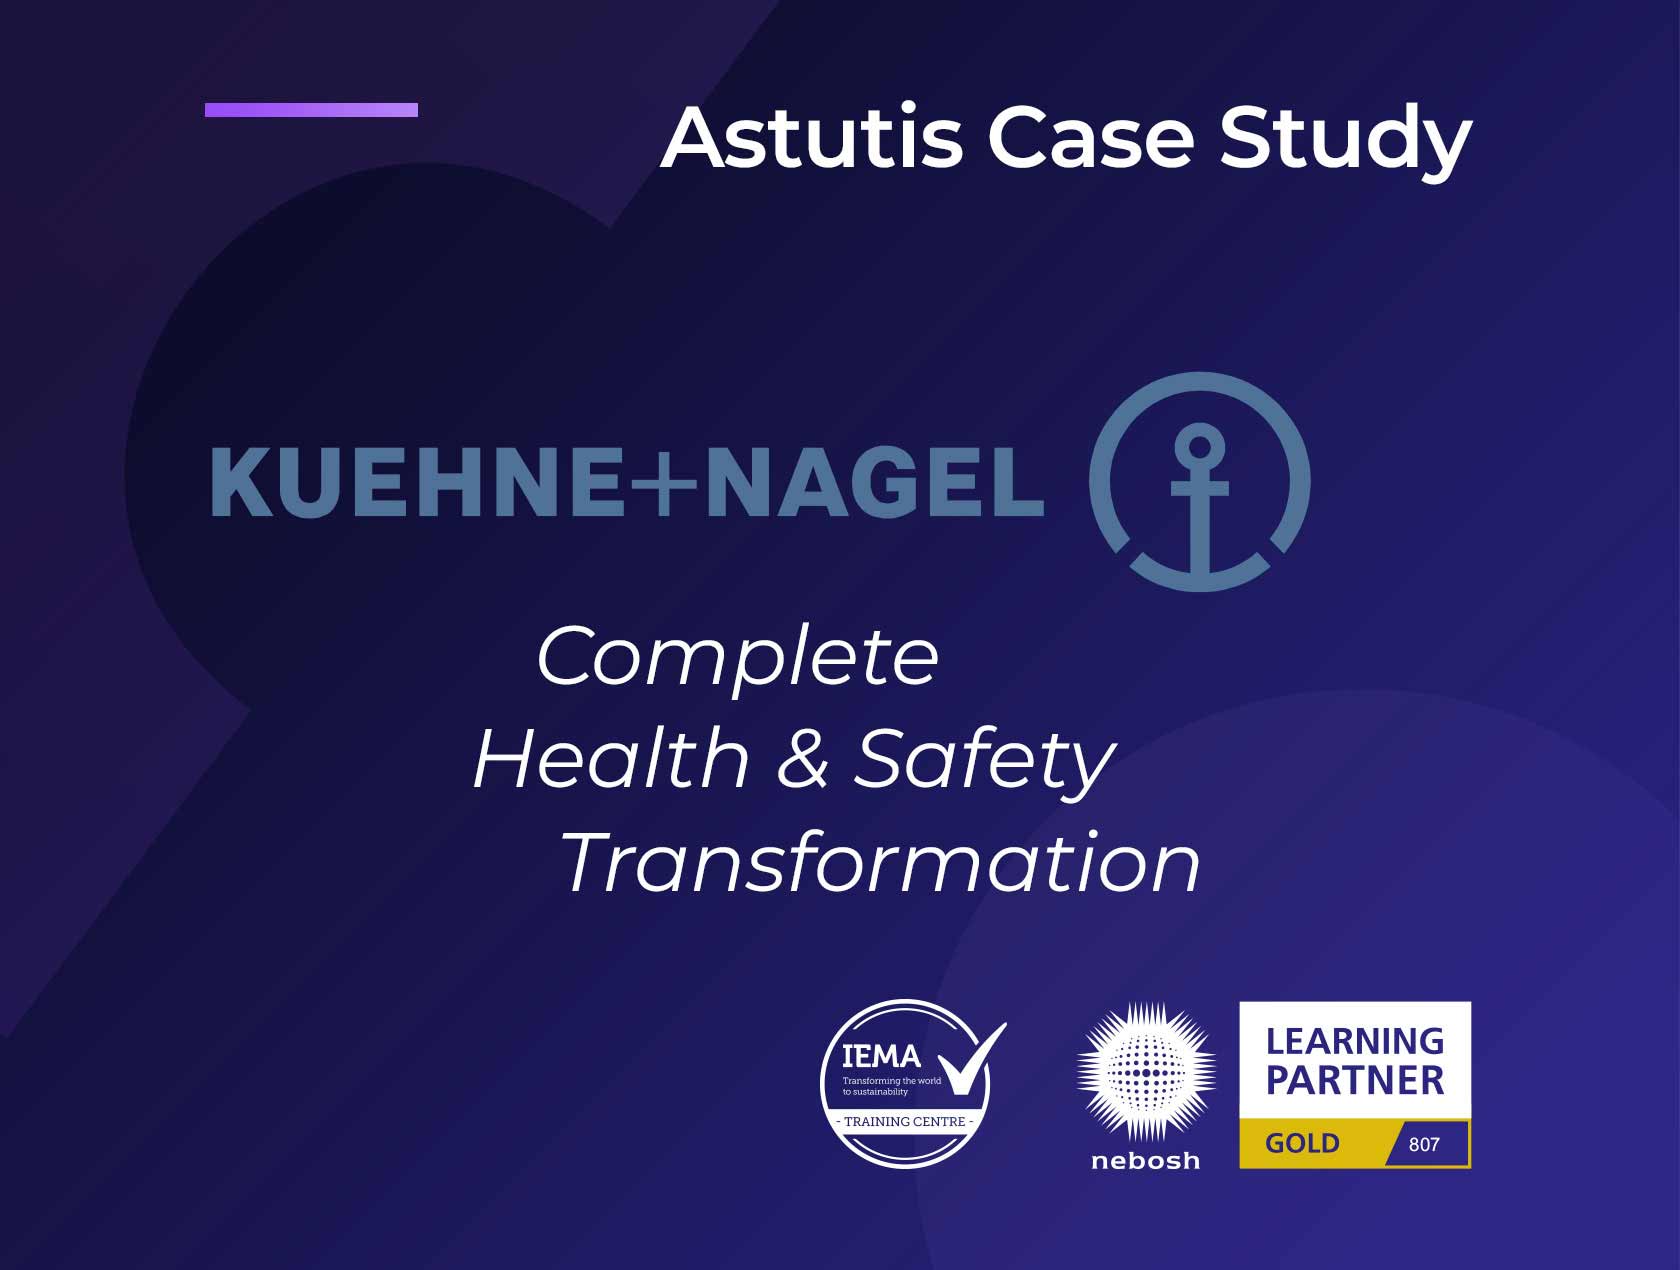 Kuehne + Nagel: Complete Health & Safety Transformation Image